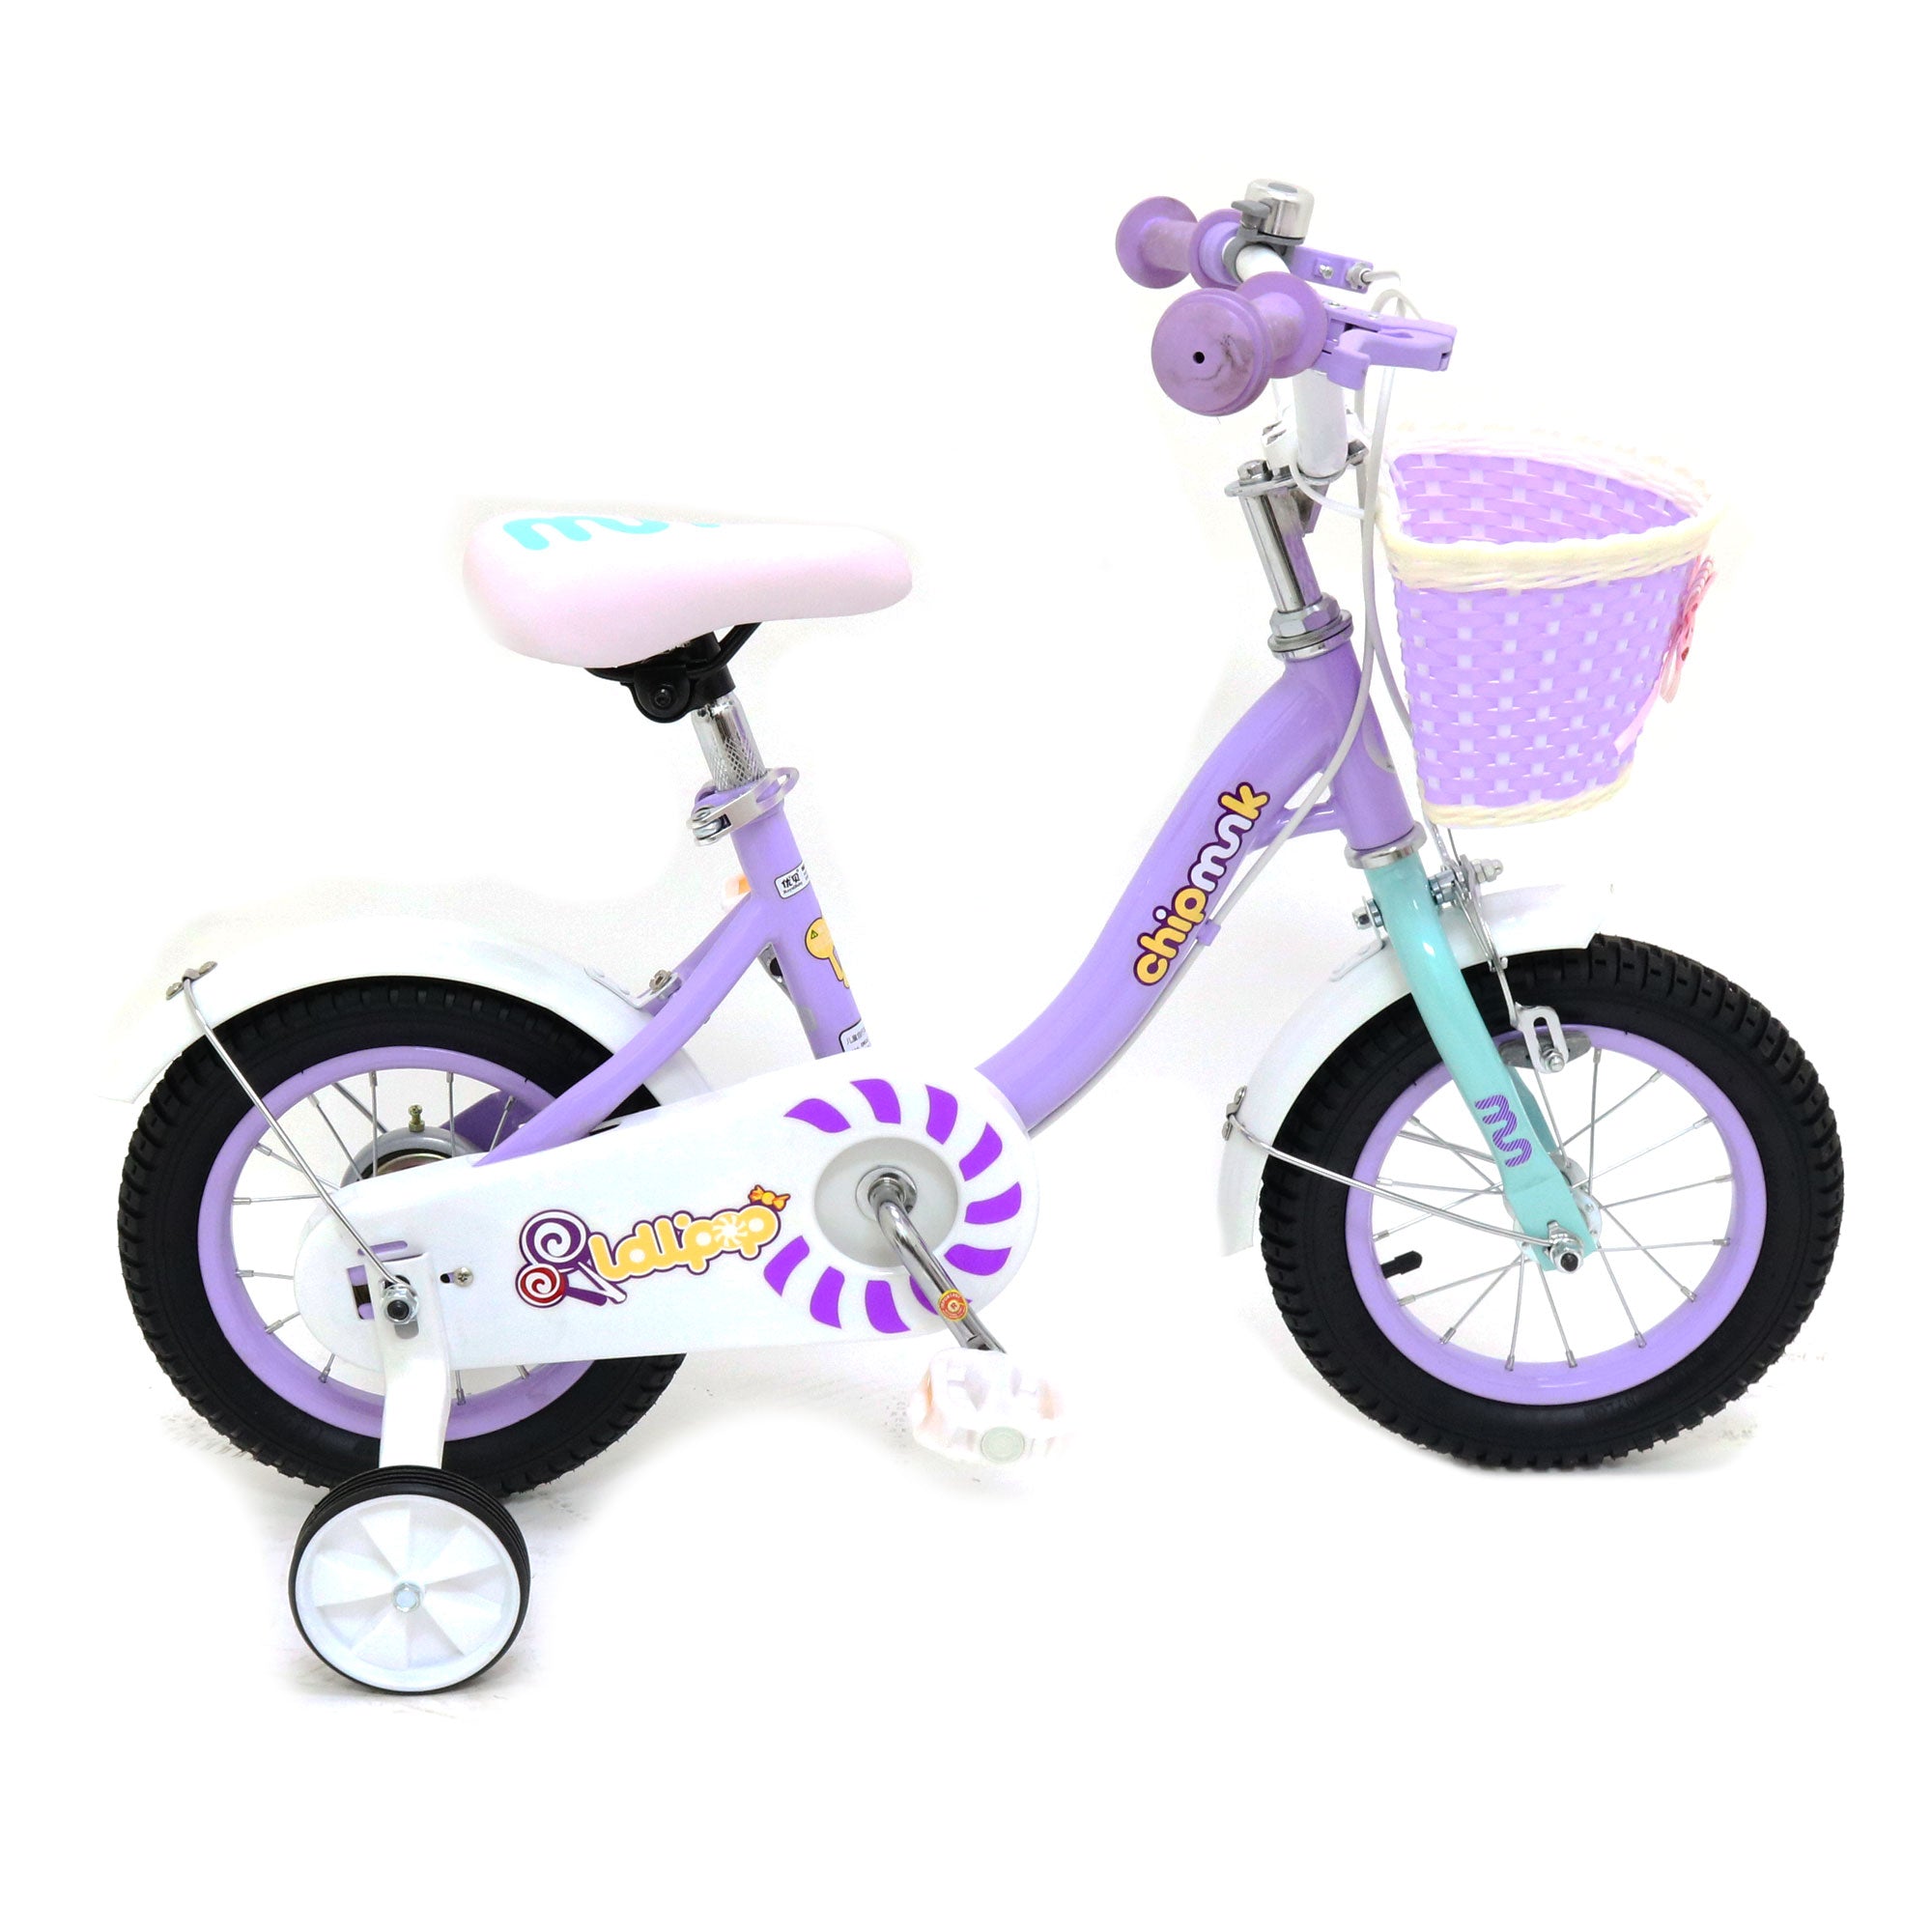 Bicicleta Chipmunk Niño 12 Purpura